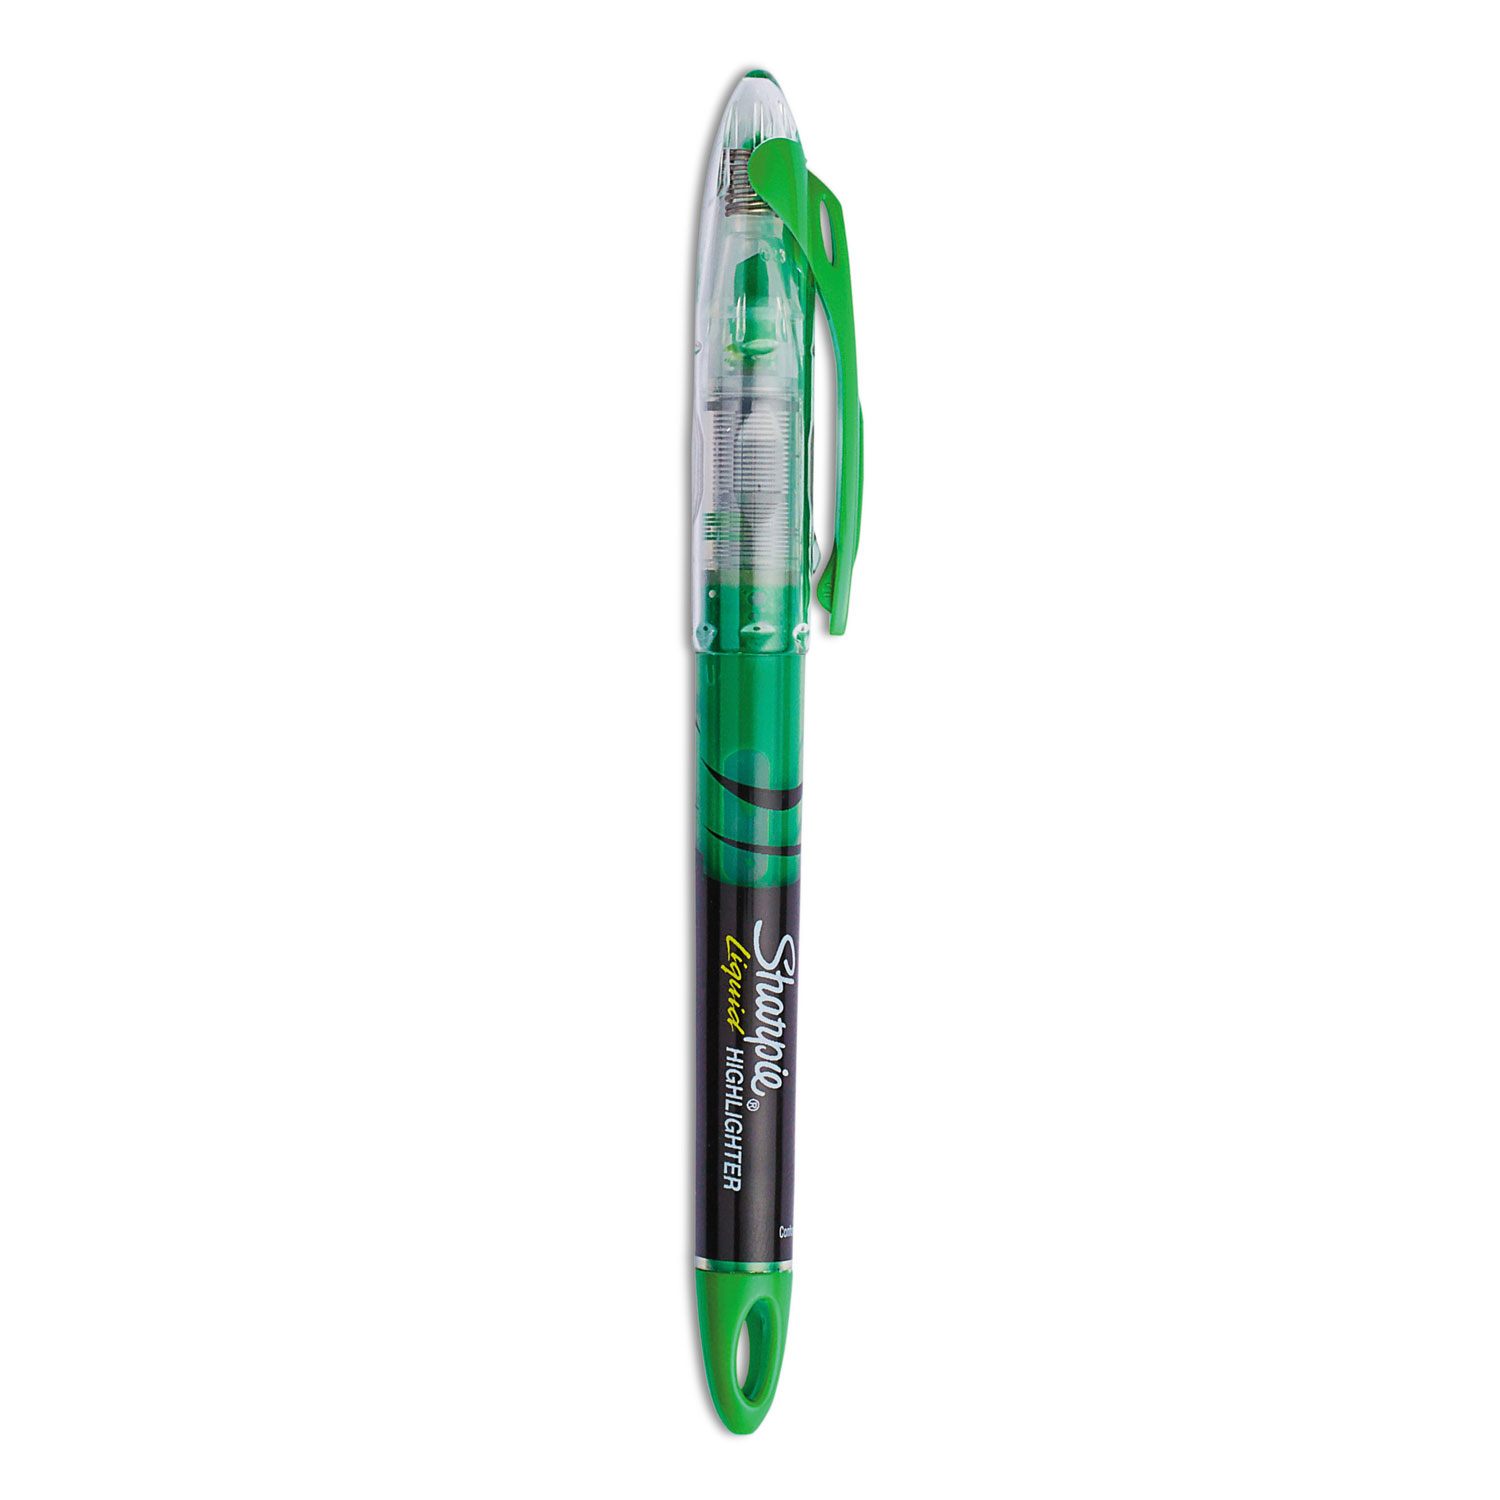 Sharpie Accent Highlighters Fluorescent Green Pack Of 12 - Office Depot